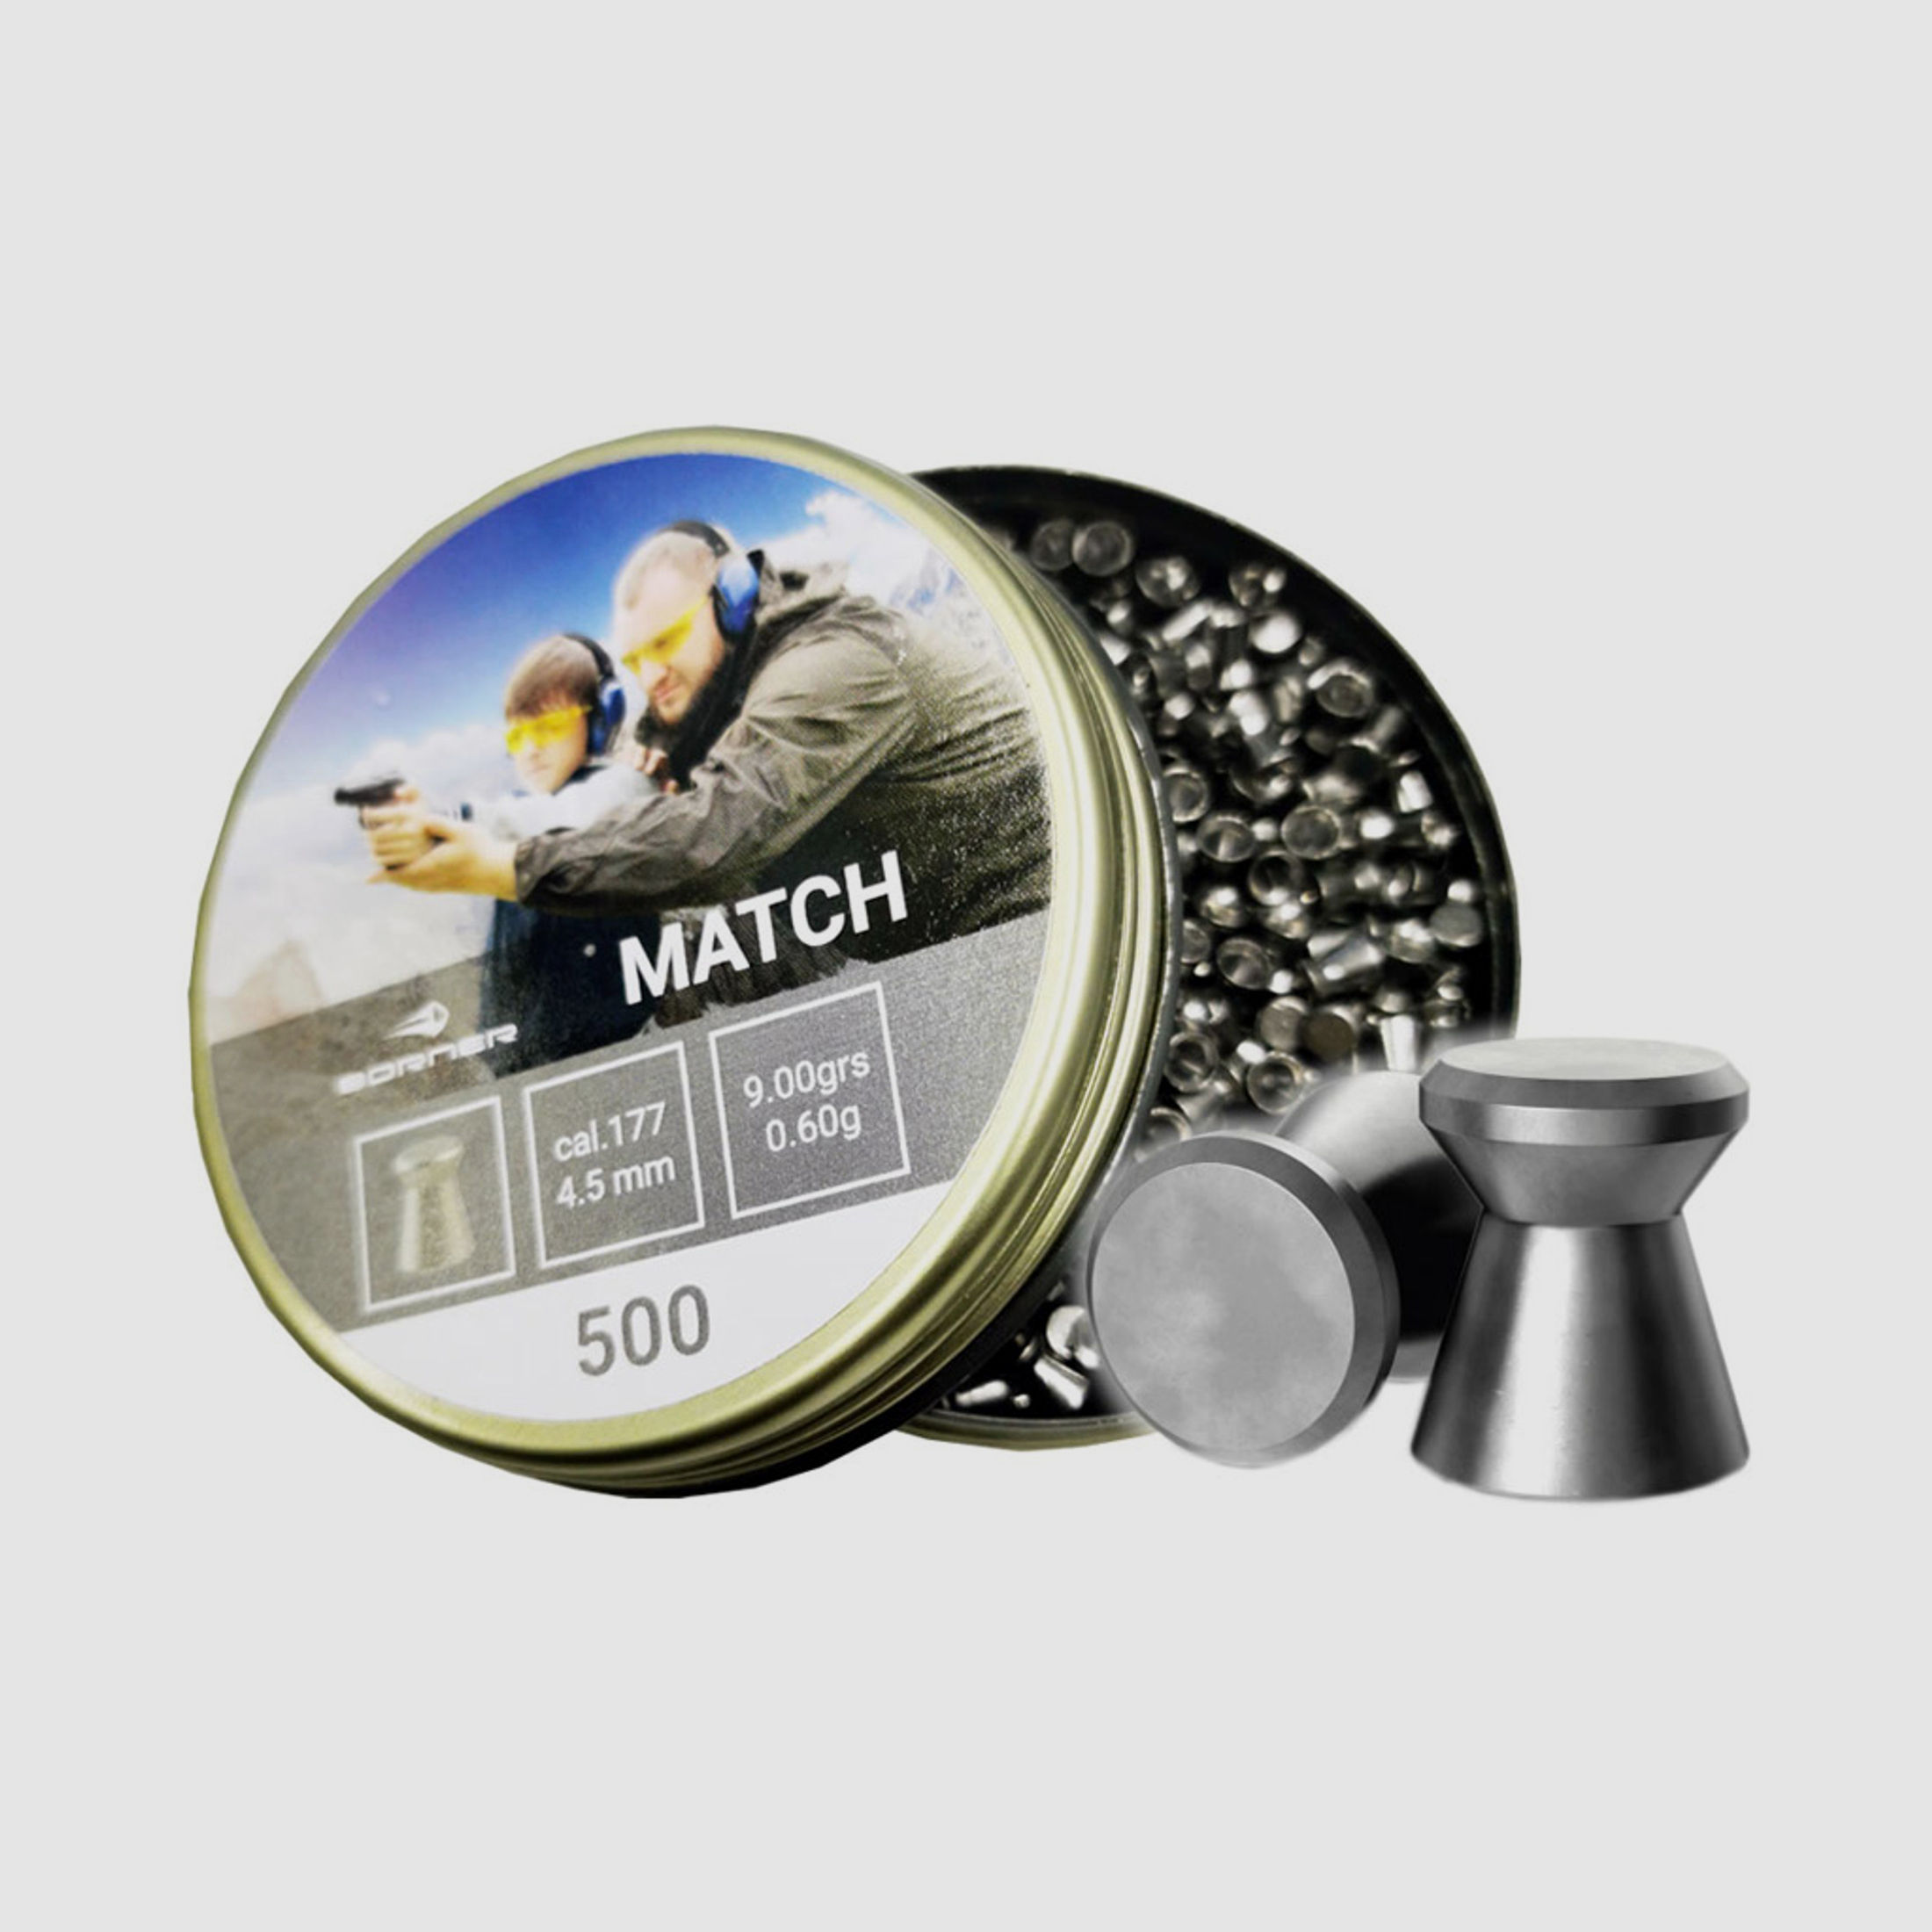 Flachkopf Diabolos Borner Match Kaliber 4,5 mm 0,60 g glatt 500 StĂĽck